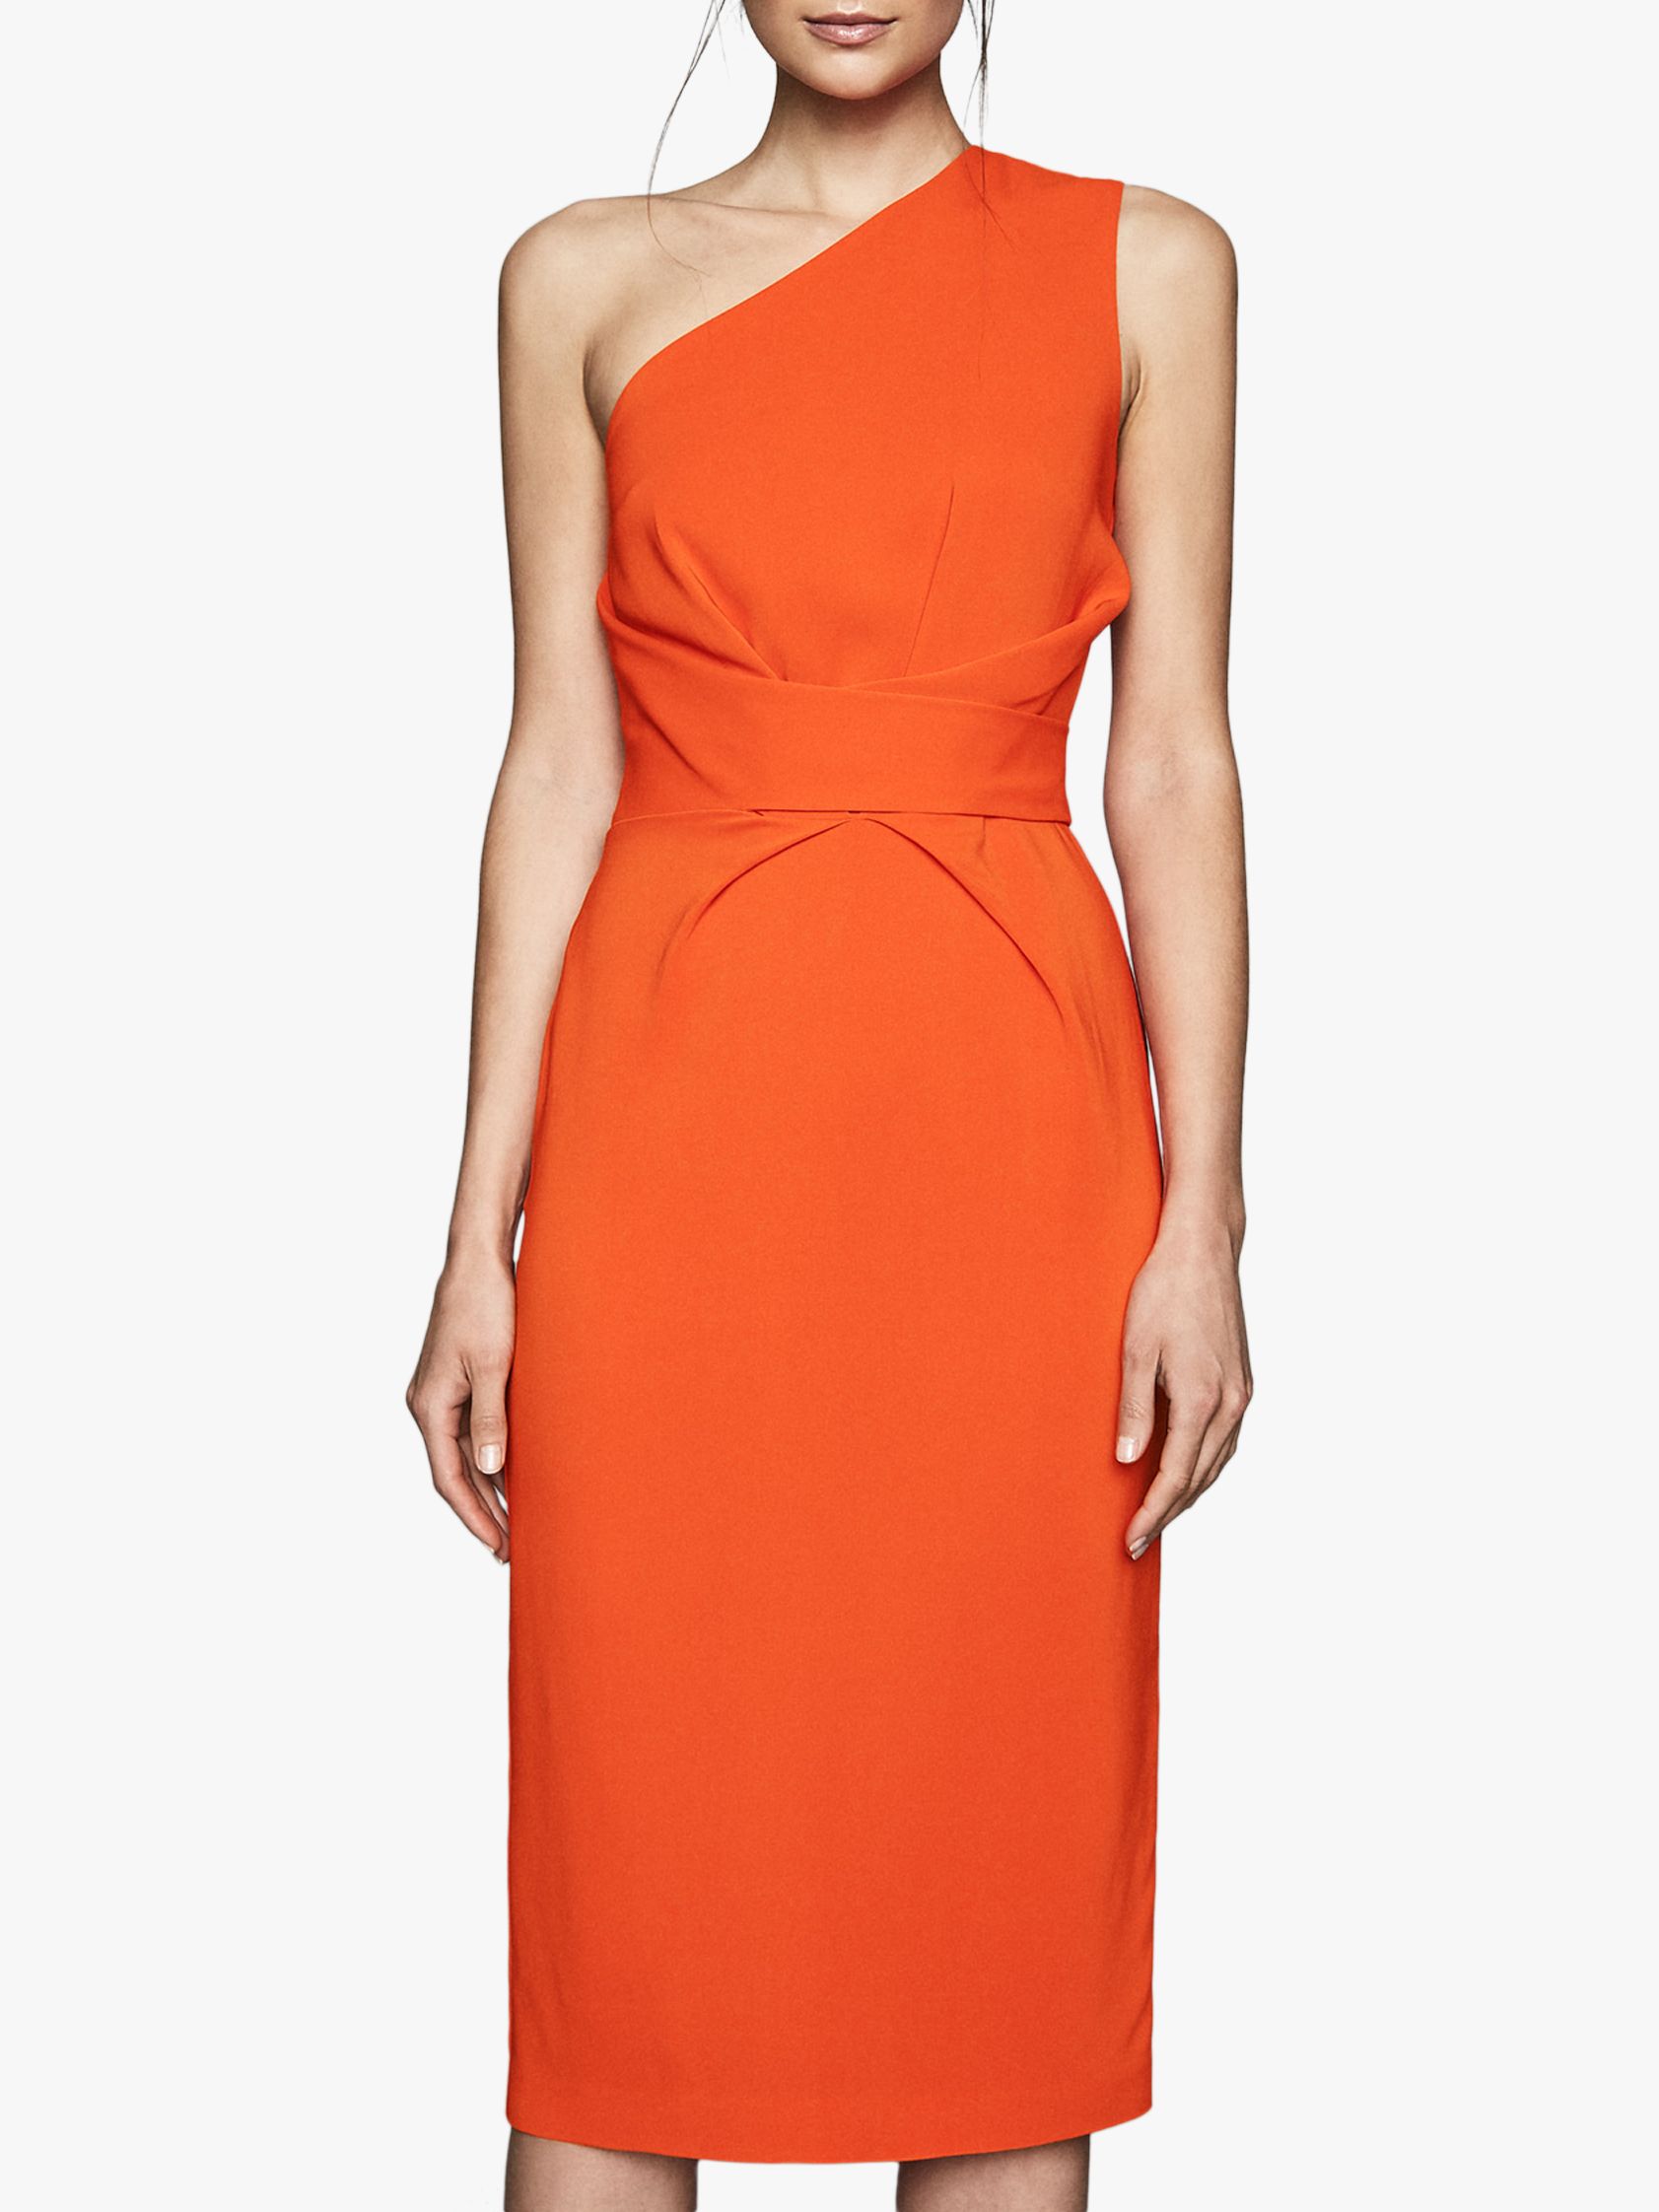 reiss orange dress